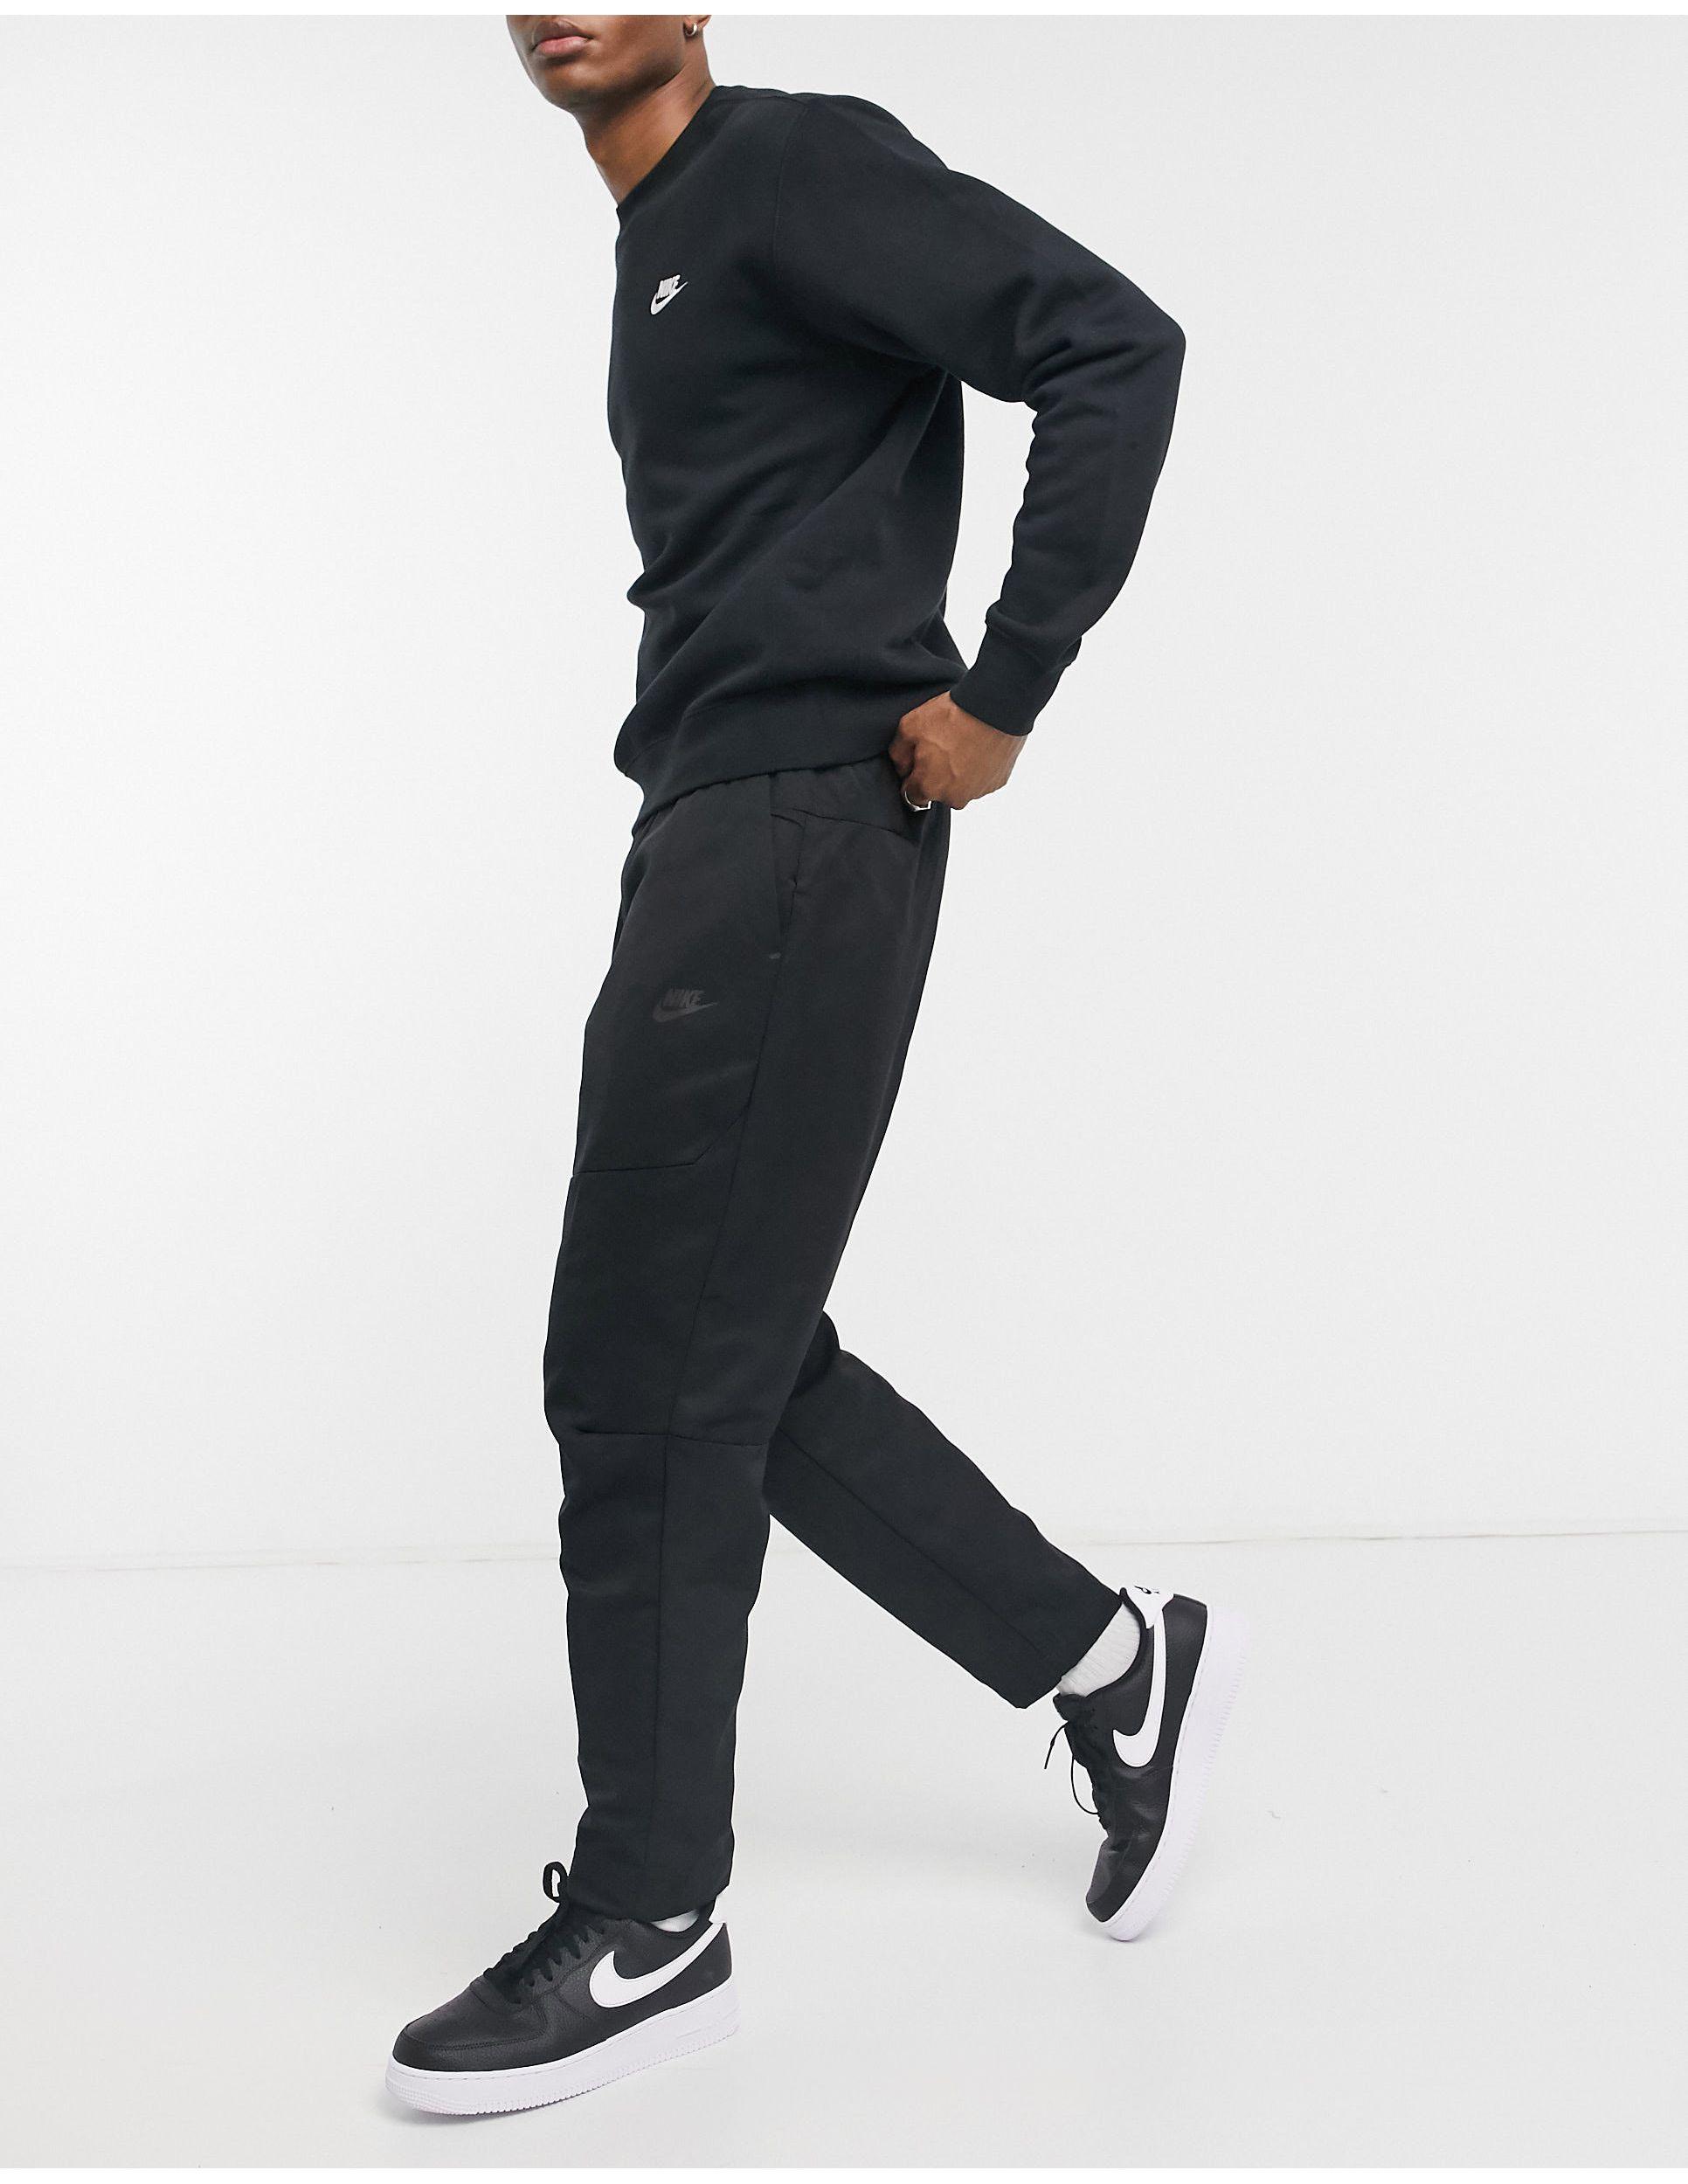 Nike Premium Essentials Winterized joggers in Black for Men - Lyst